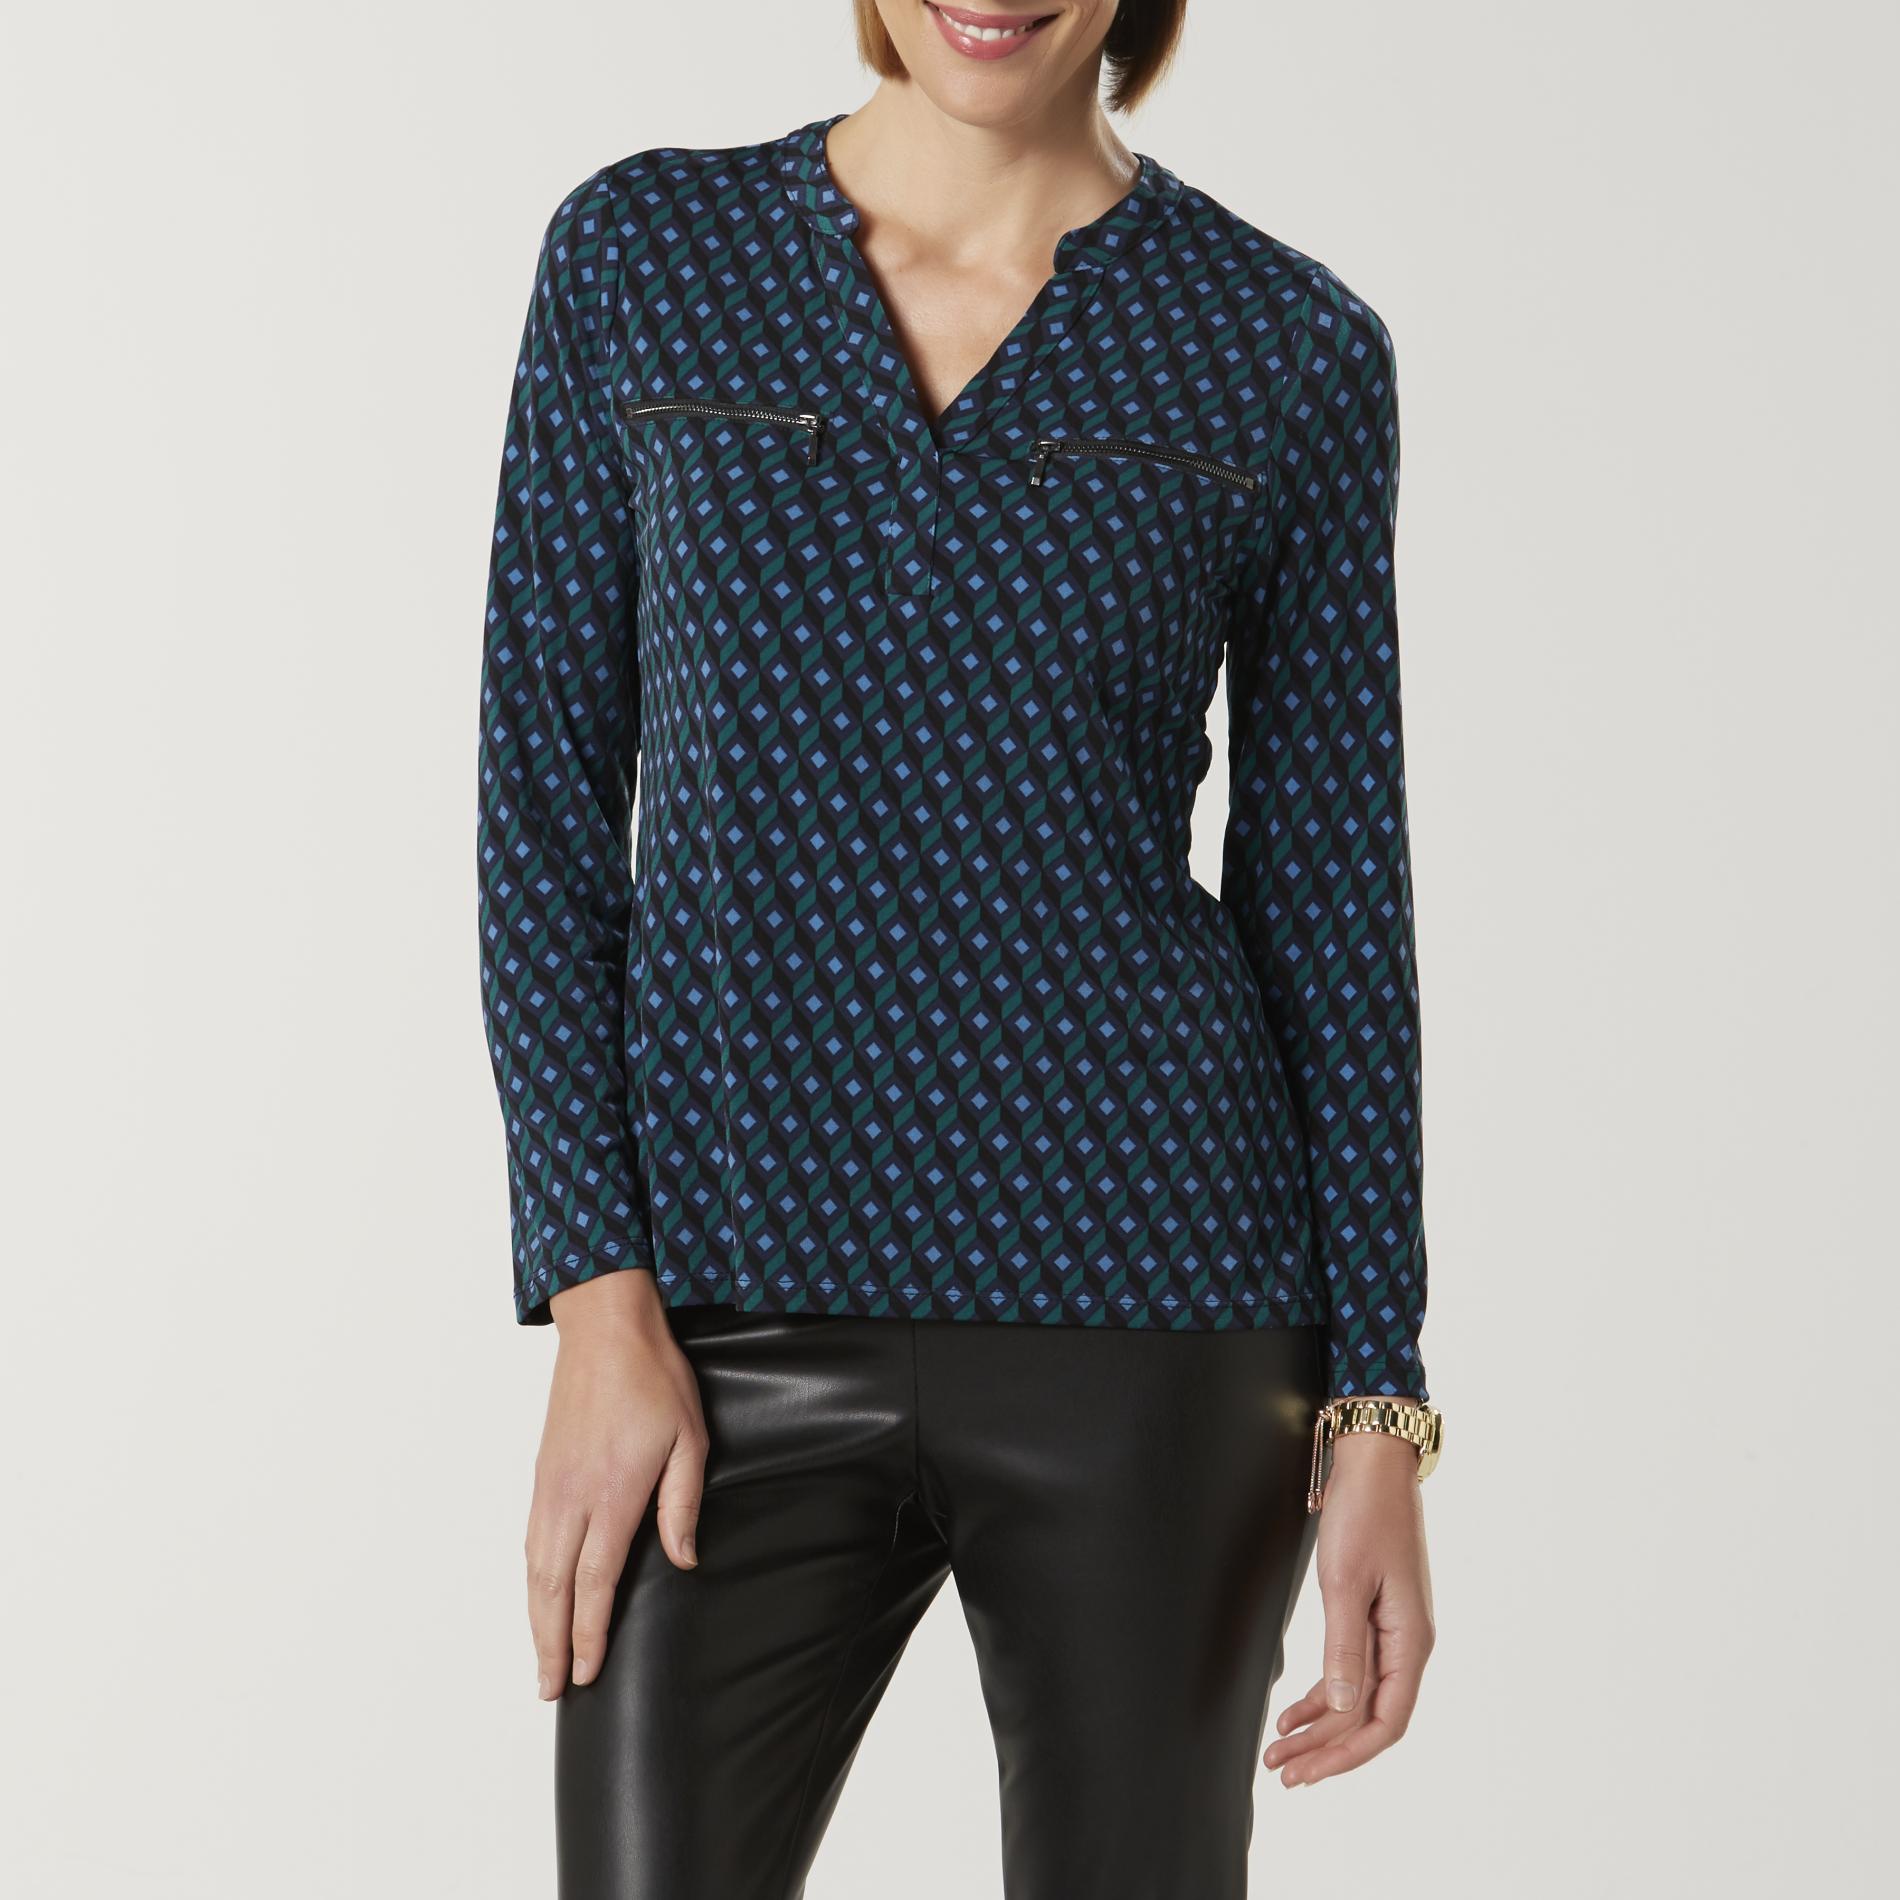 Jaclyn Smith Women's Embellished Shirt - Geometric